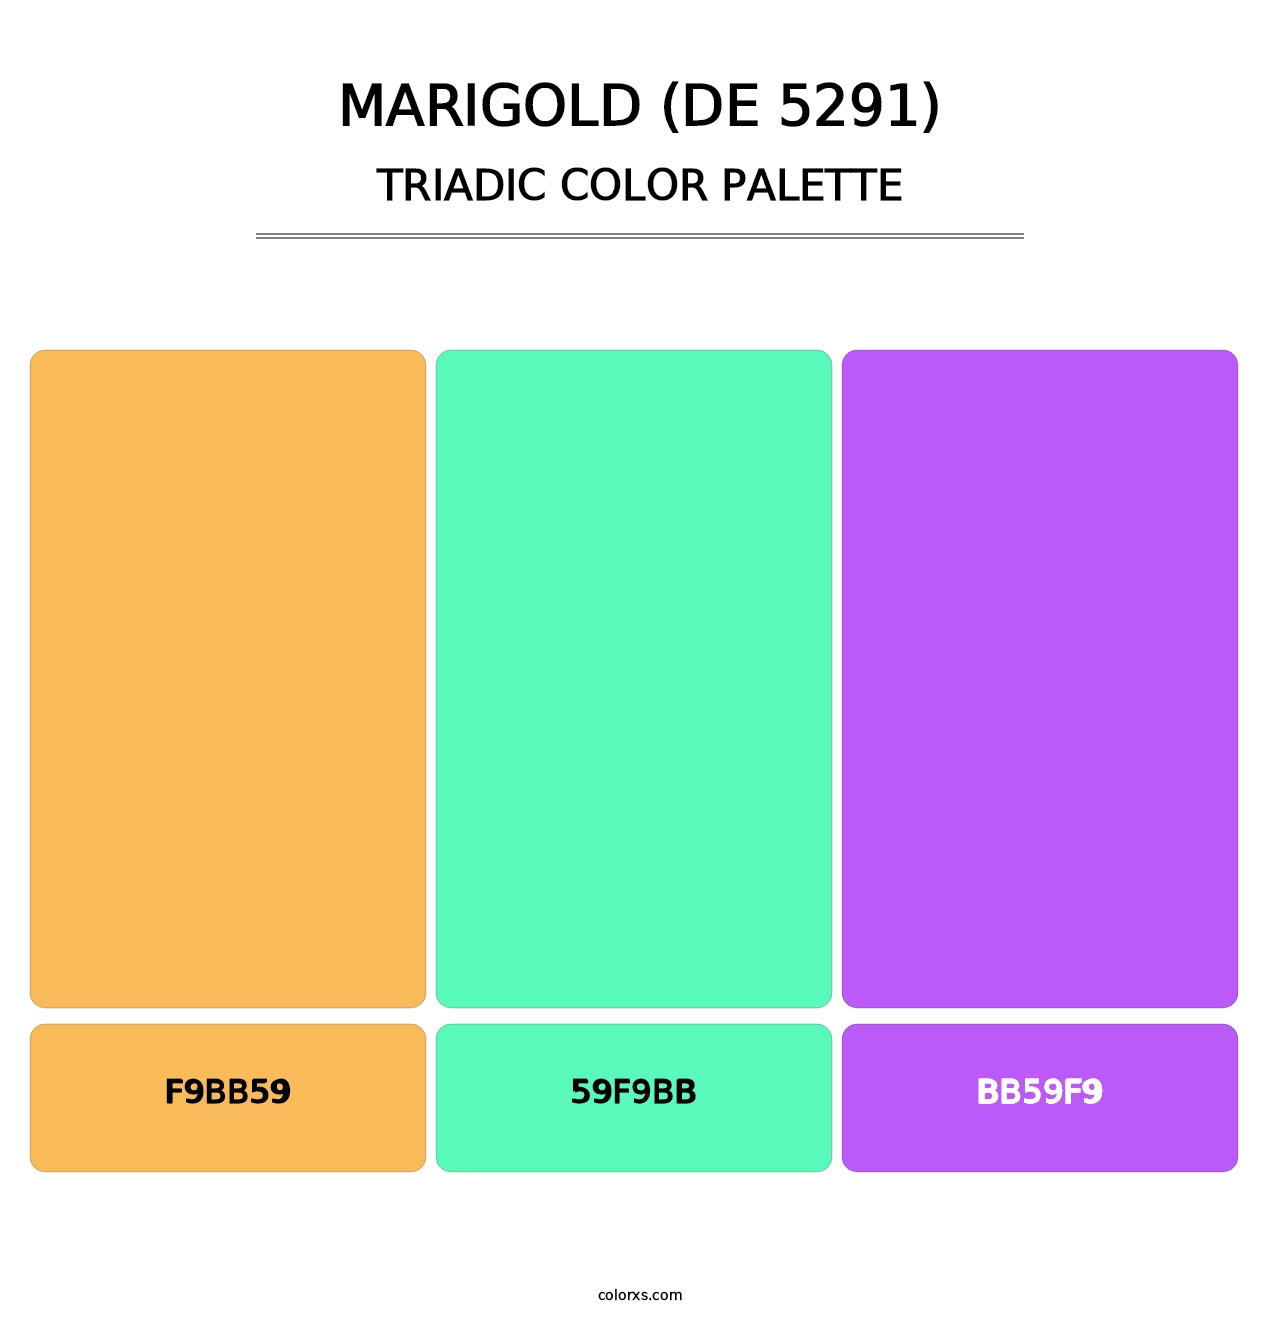 Marigold (DE 5291) - Triadic Color Palette